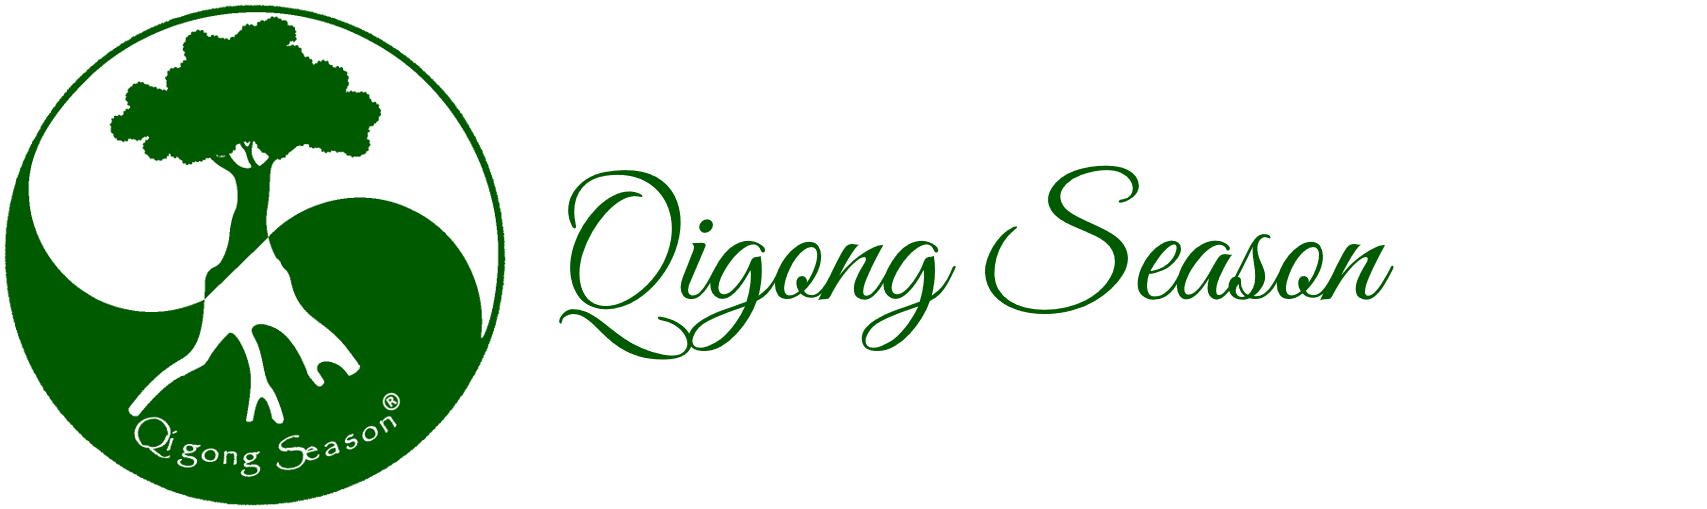 Qigong Season – Seminare, Coaching & Kurse von Sabine Piegeler